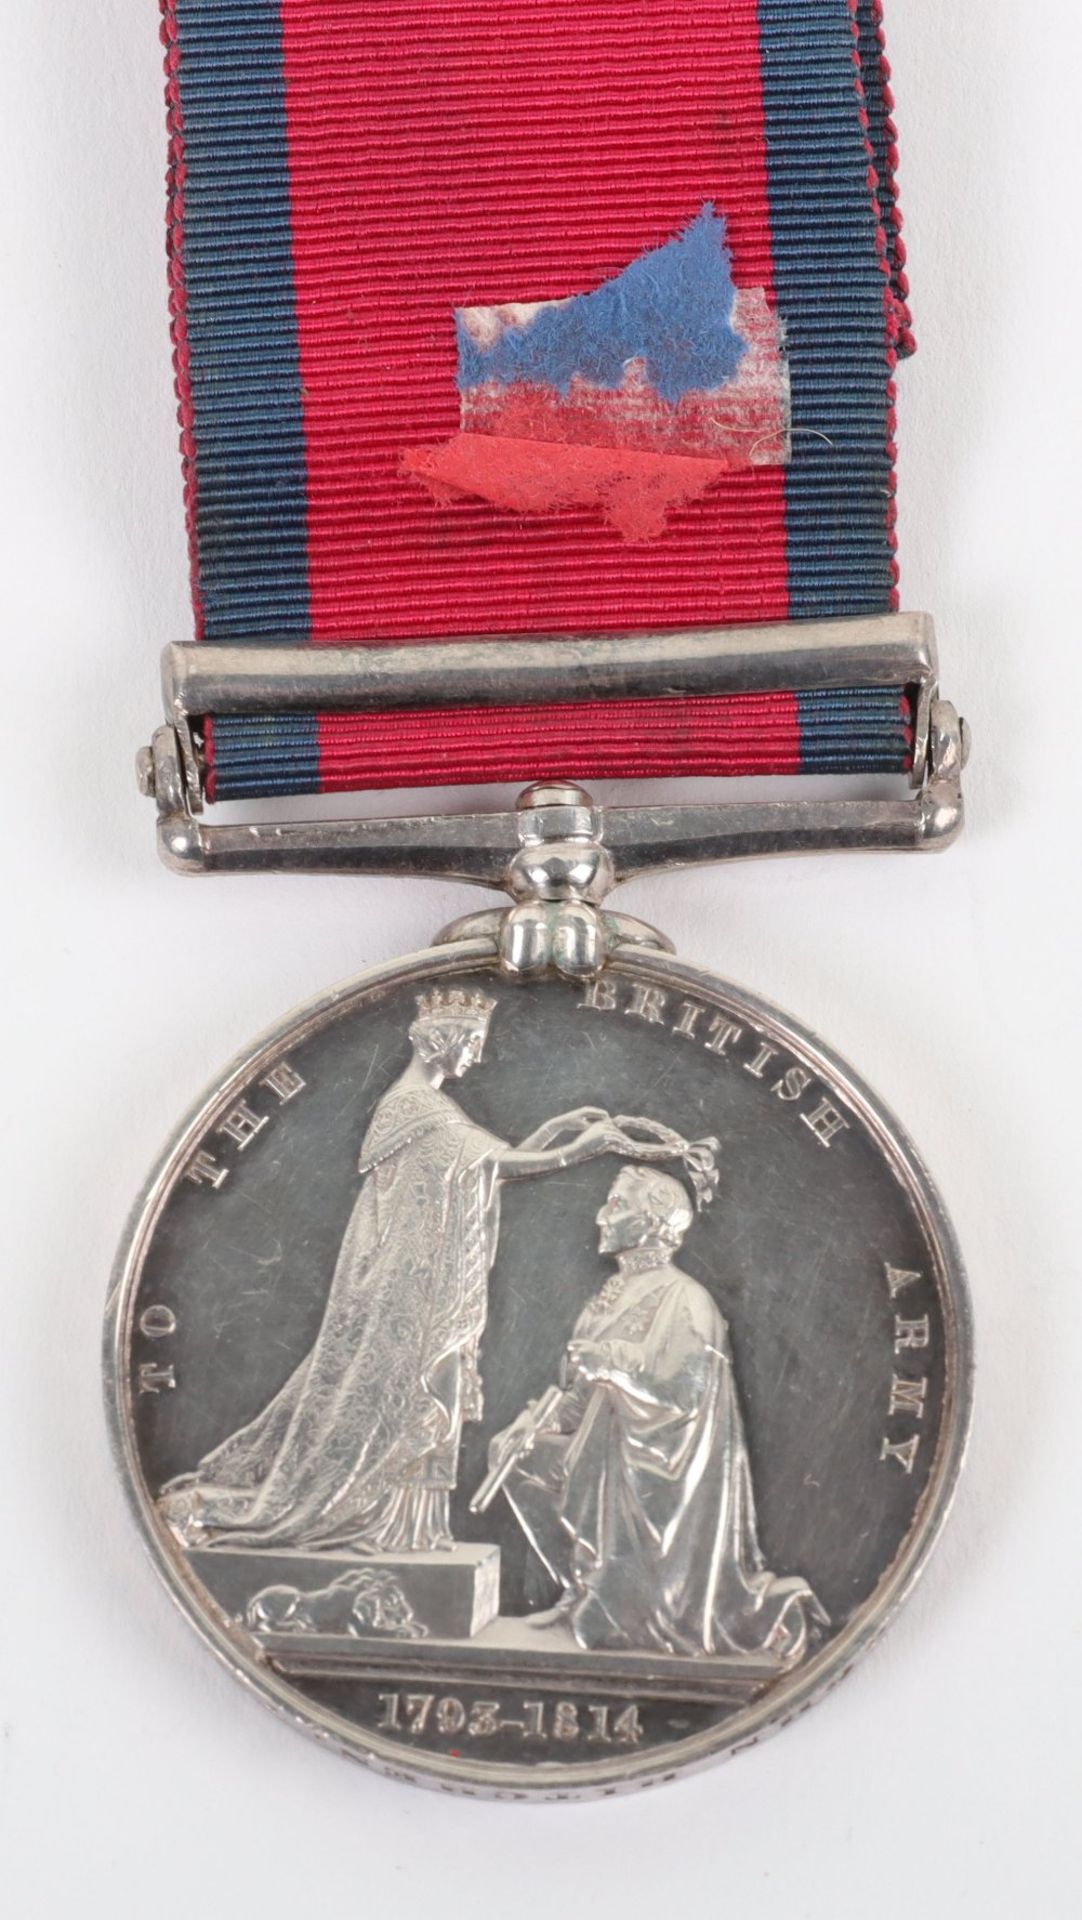 Fine Military General Service Medal 1793-1814, Sahagun & Benevente, 7th Light Dragoons - Image 3 of 3